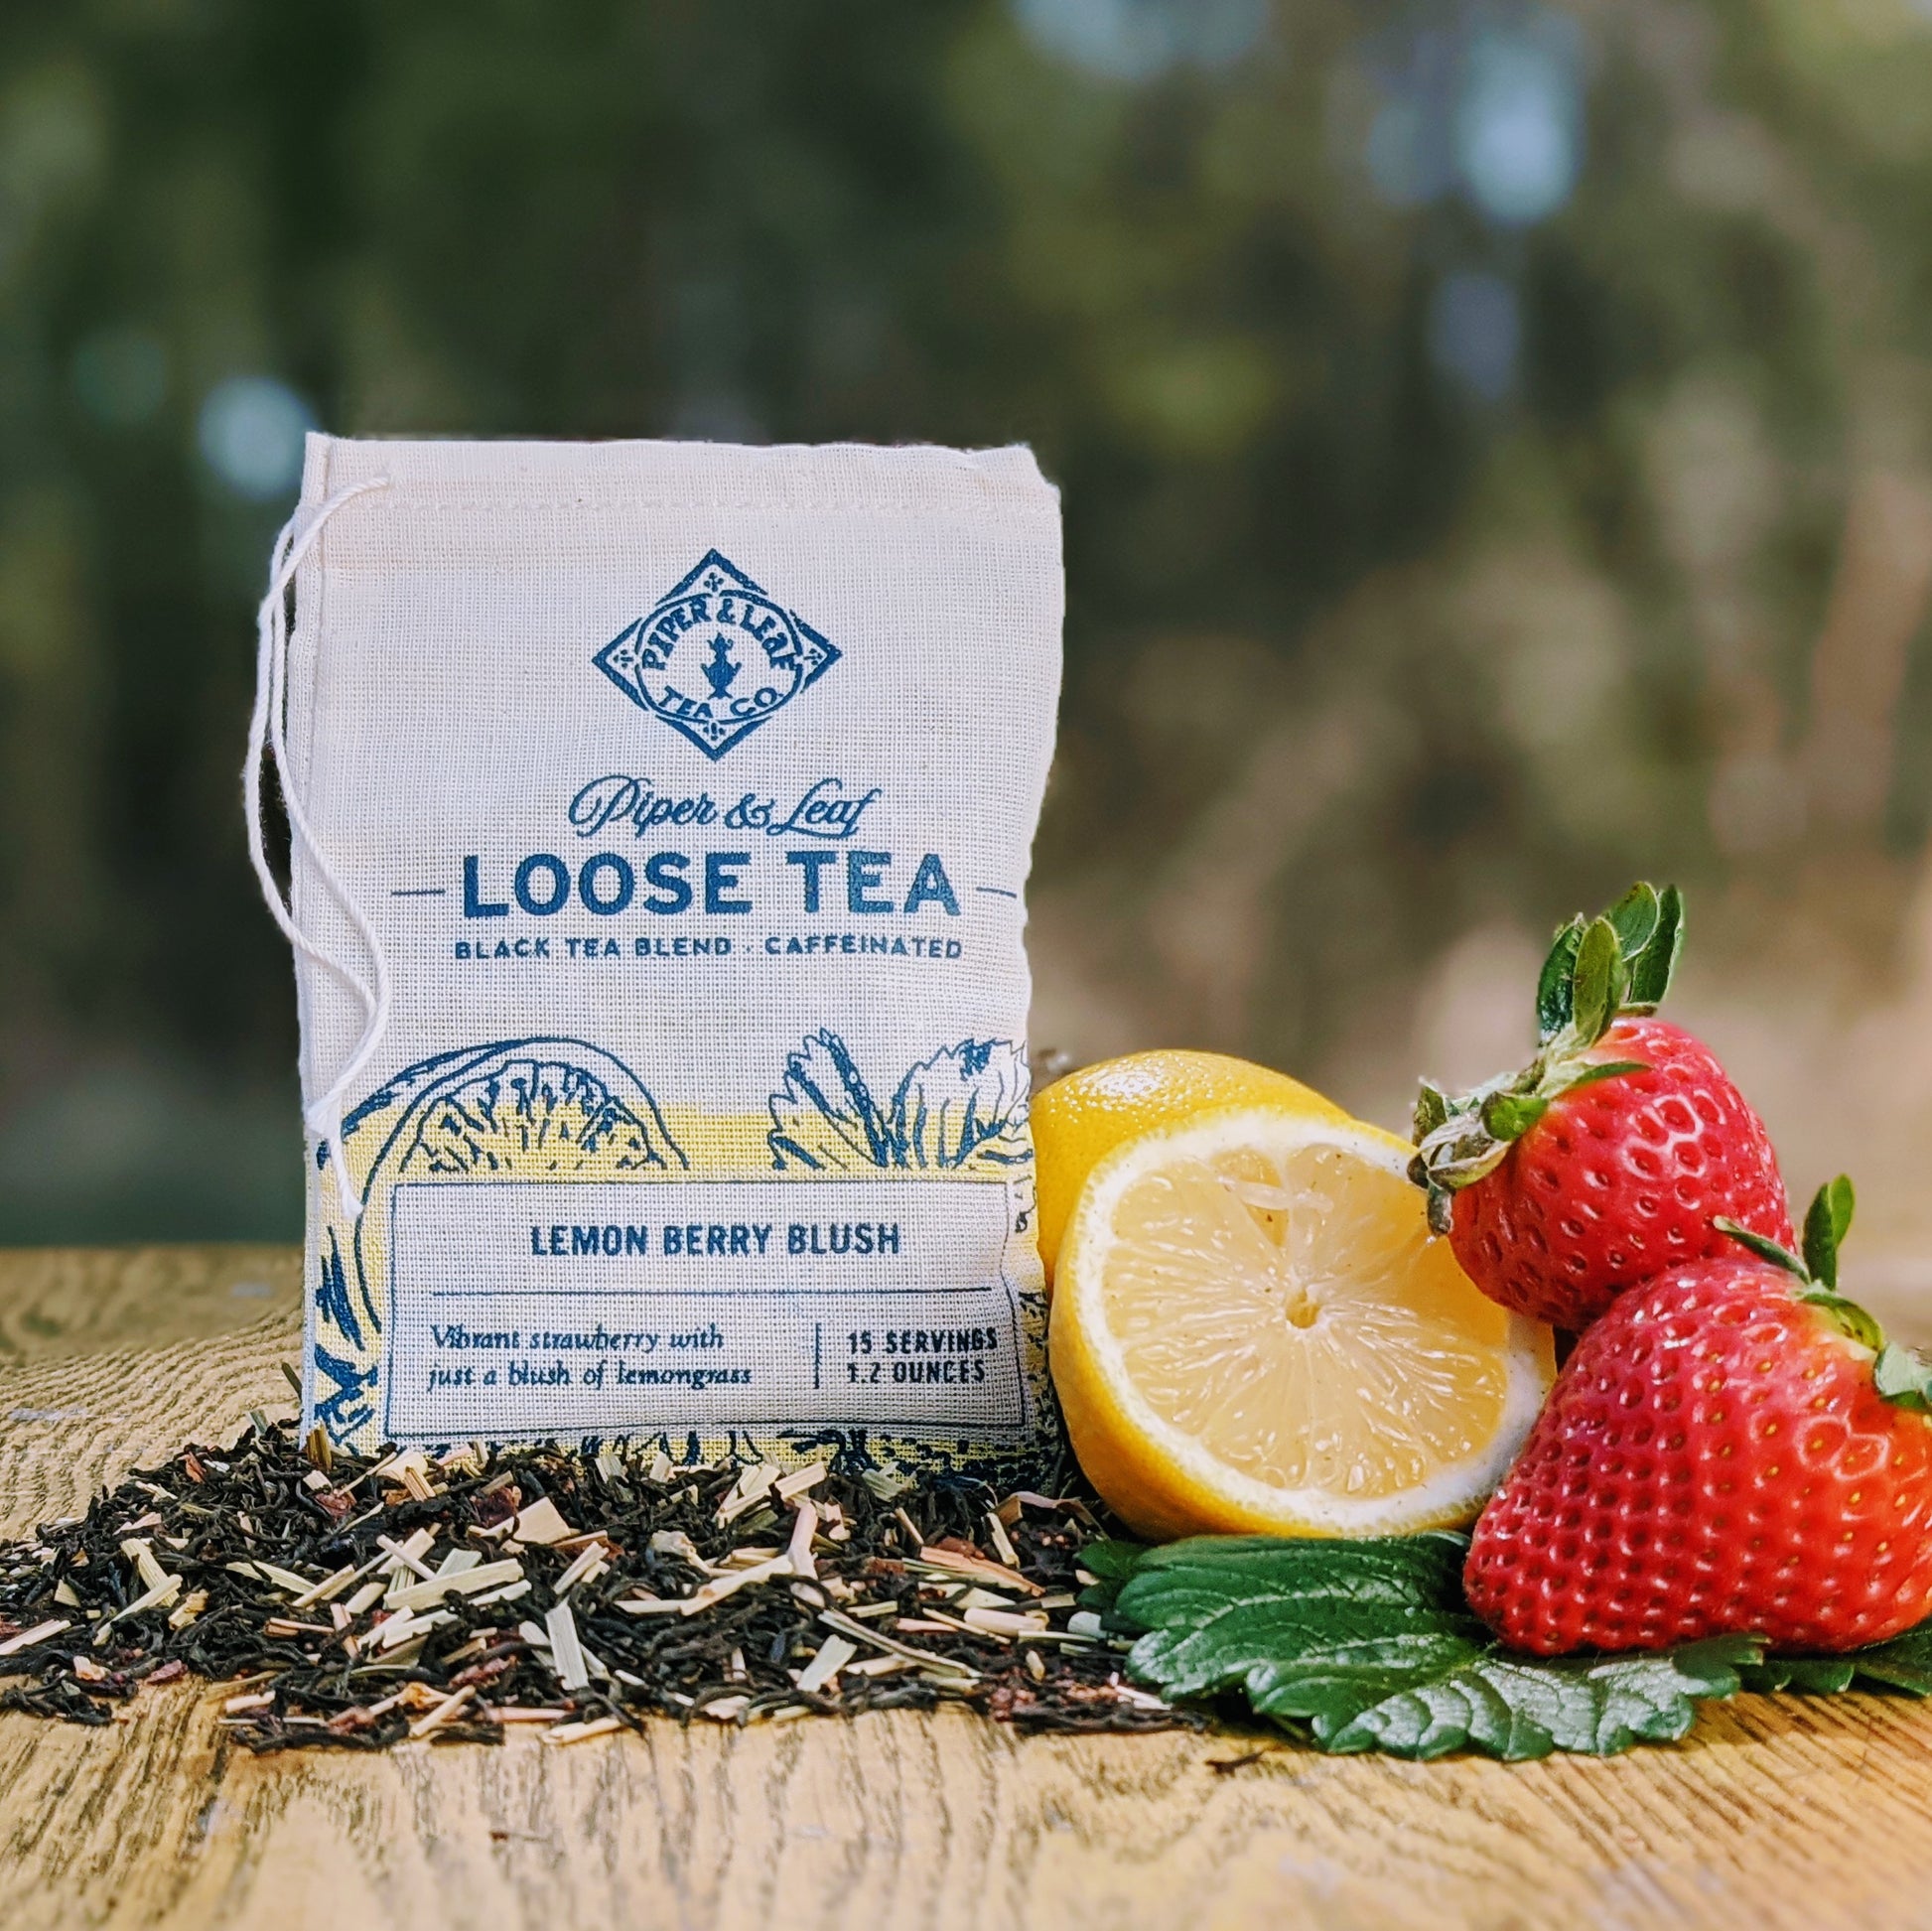 Lemon Berry Blush Muslin Bag of Loose Leaf Tea - 15 Servings